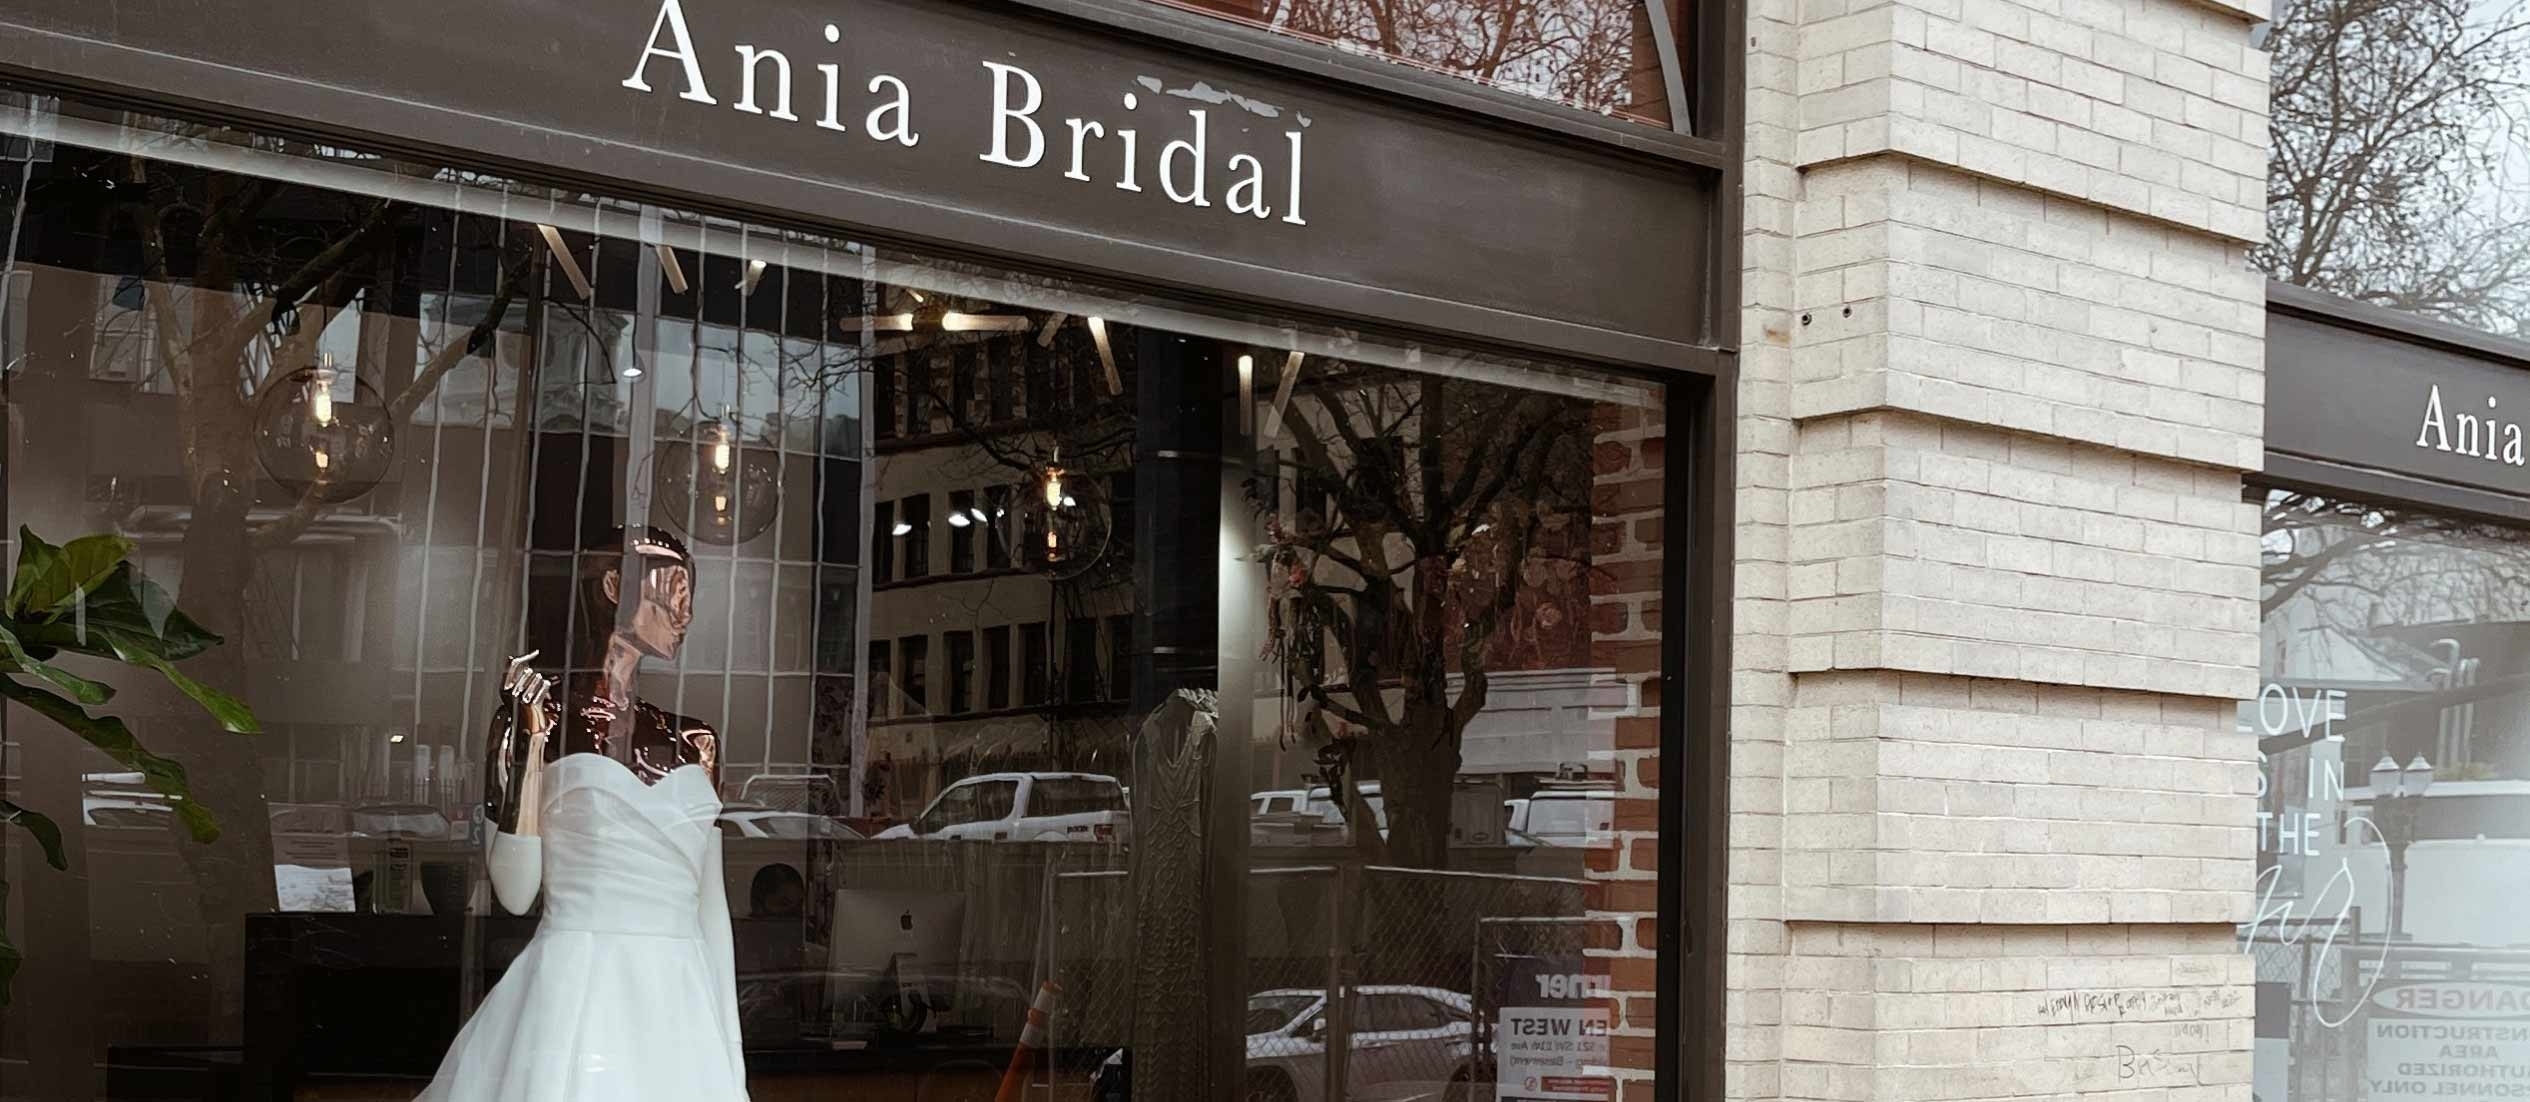 Ania Bridal store